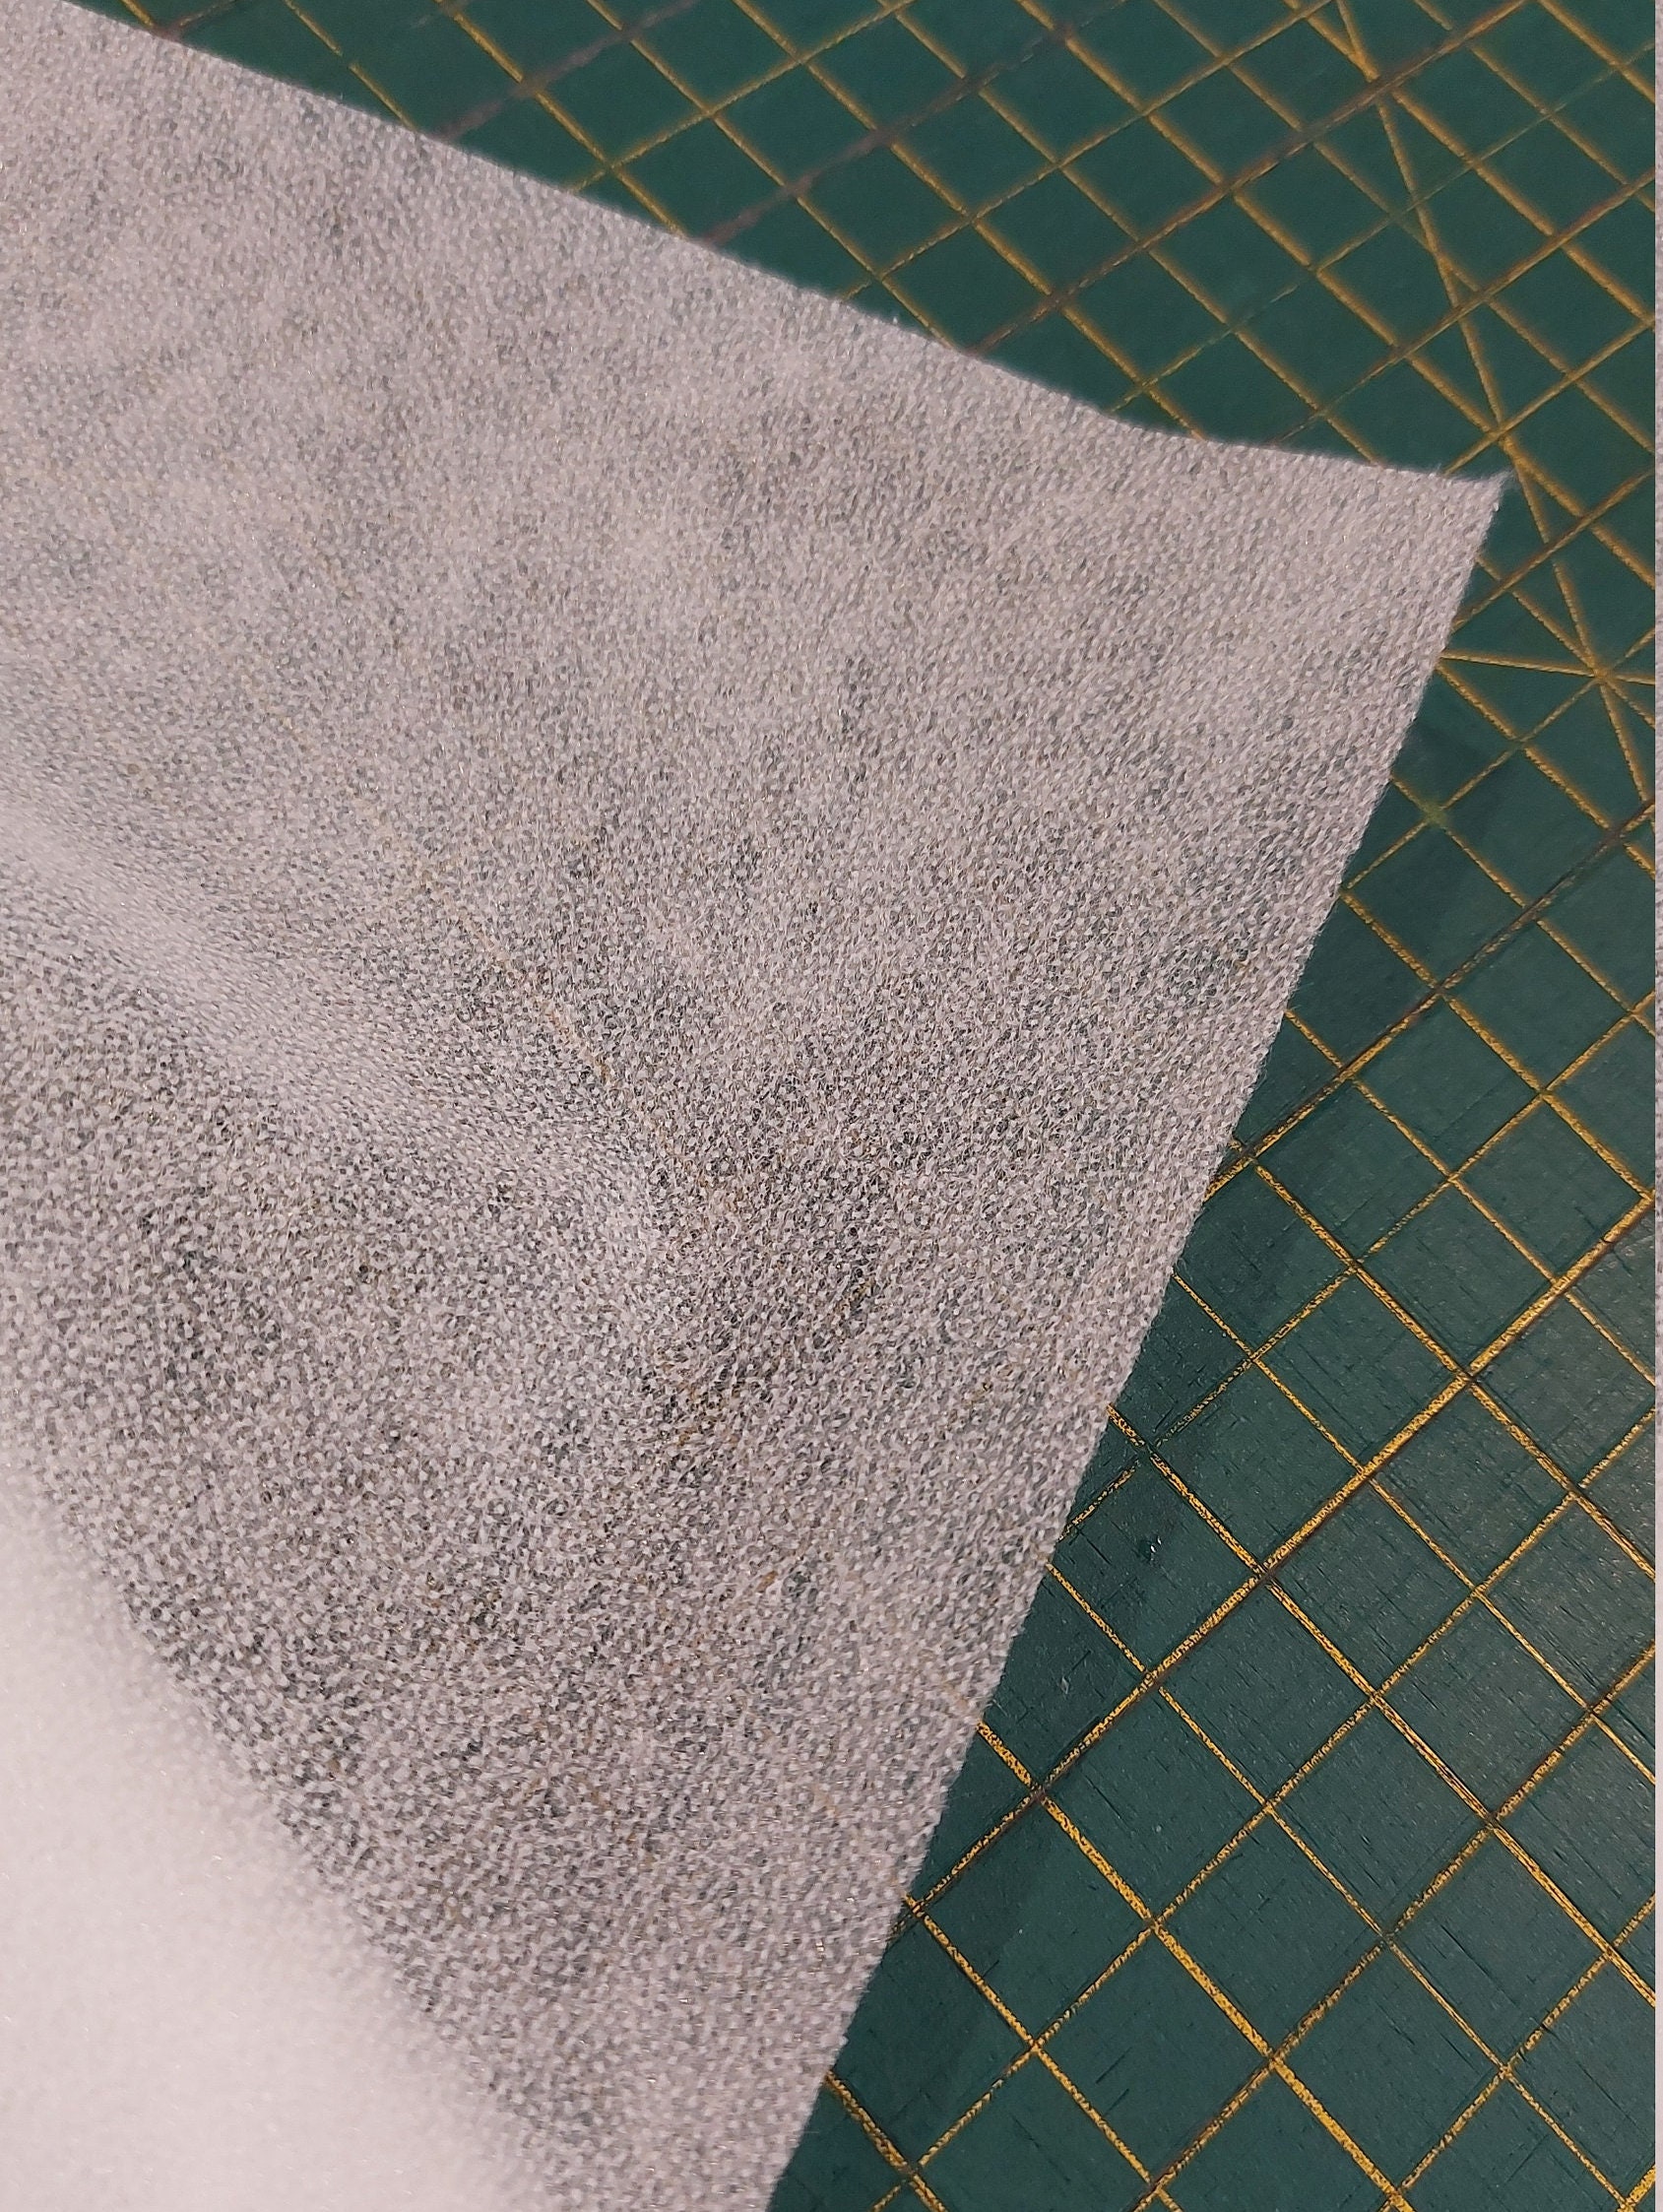 Iron on Fusible Single Side White Cotton Interfacing Fabric. Hard Finishing  